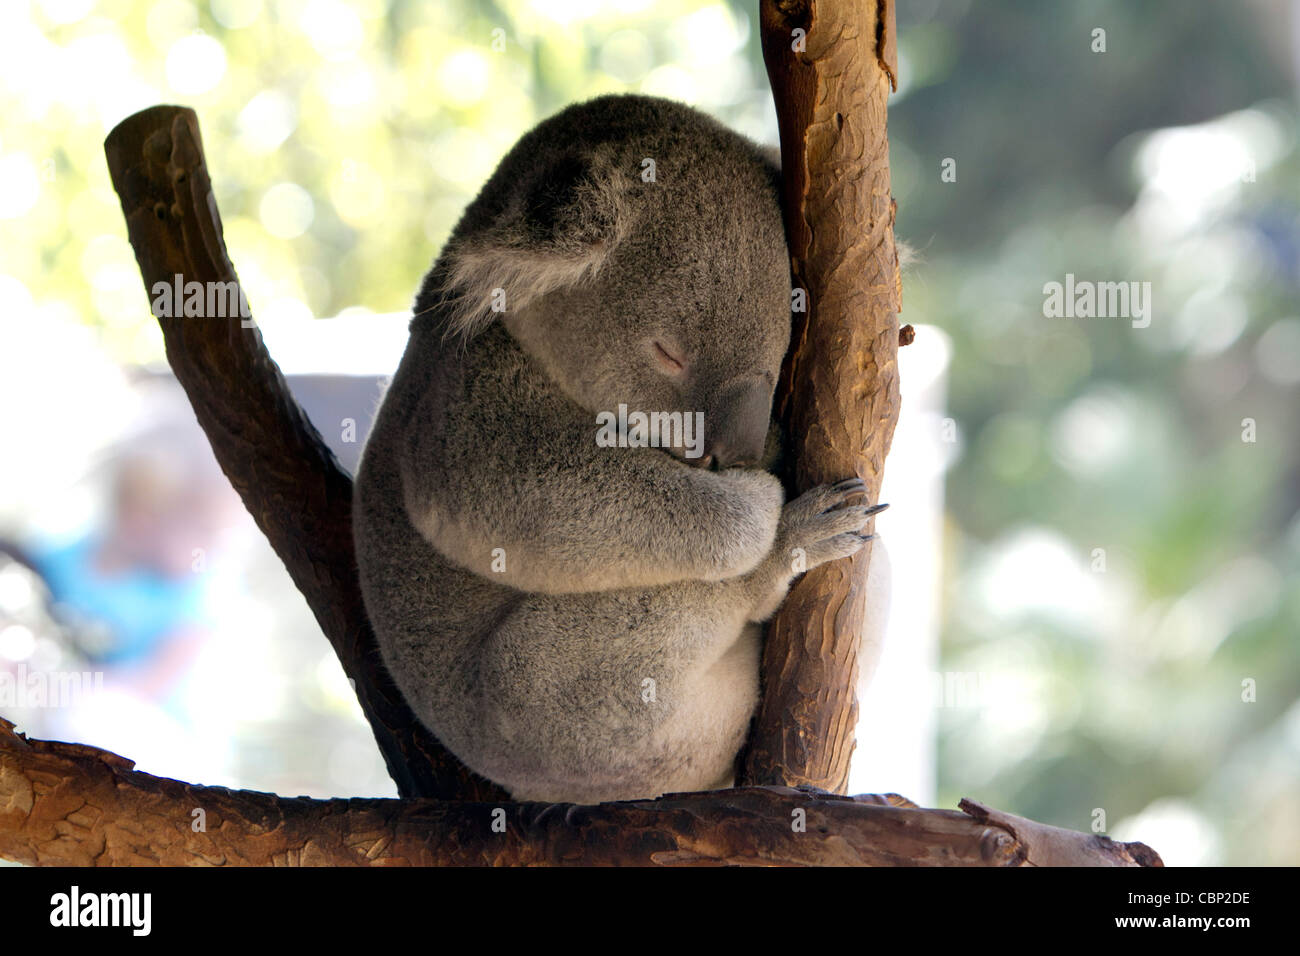 Un Koala (Phascolarctos cinereus) un marsupial herbivore arboricole originaire de l'Australie. Banque D'Images